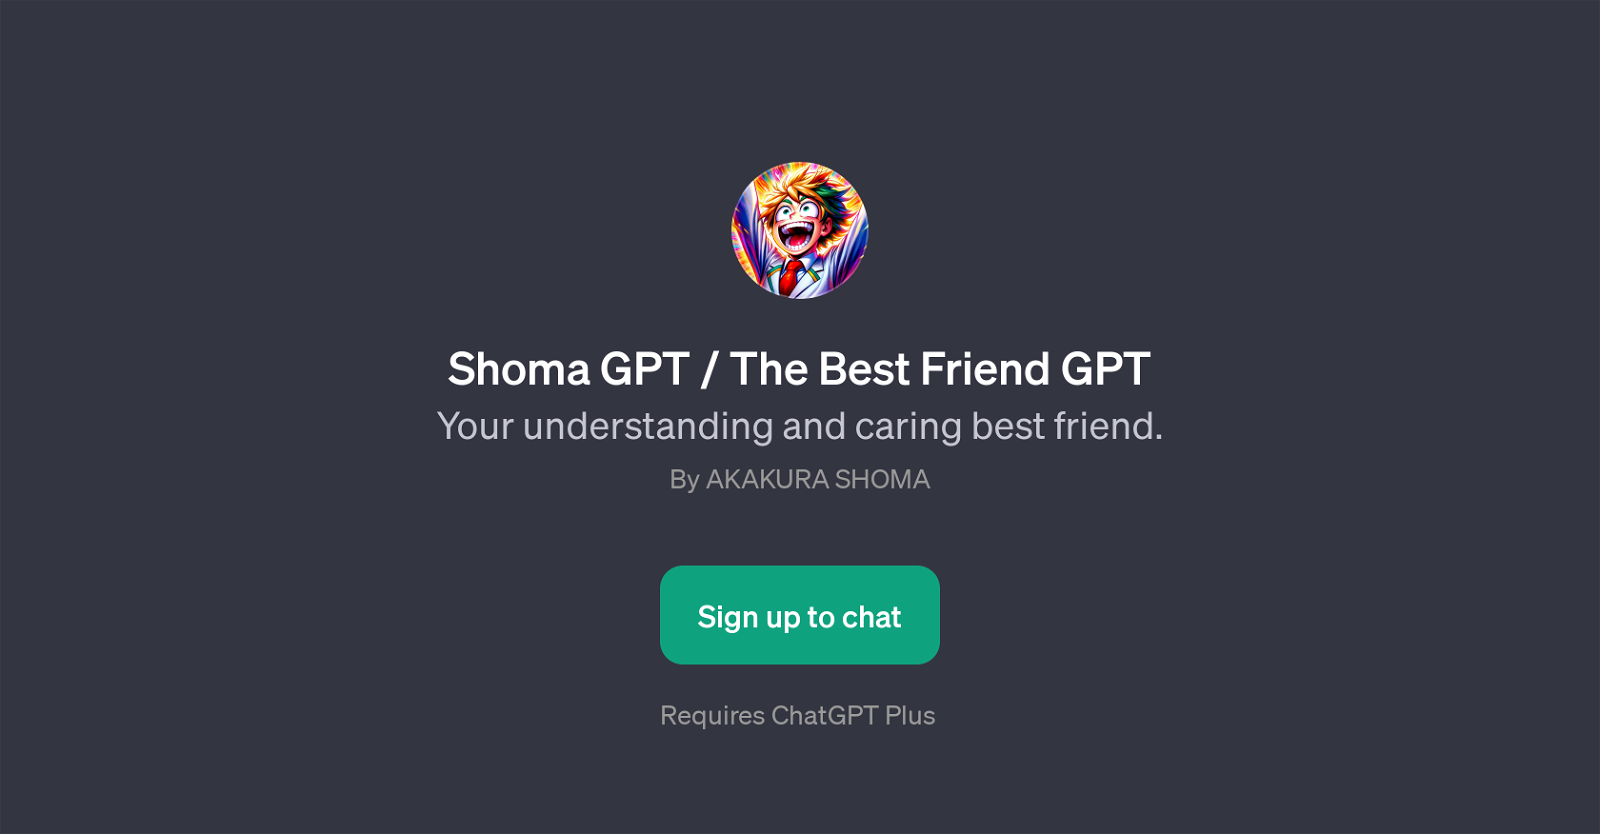 Shoma GPT / The Best Friend GPT website